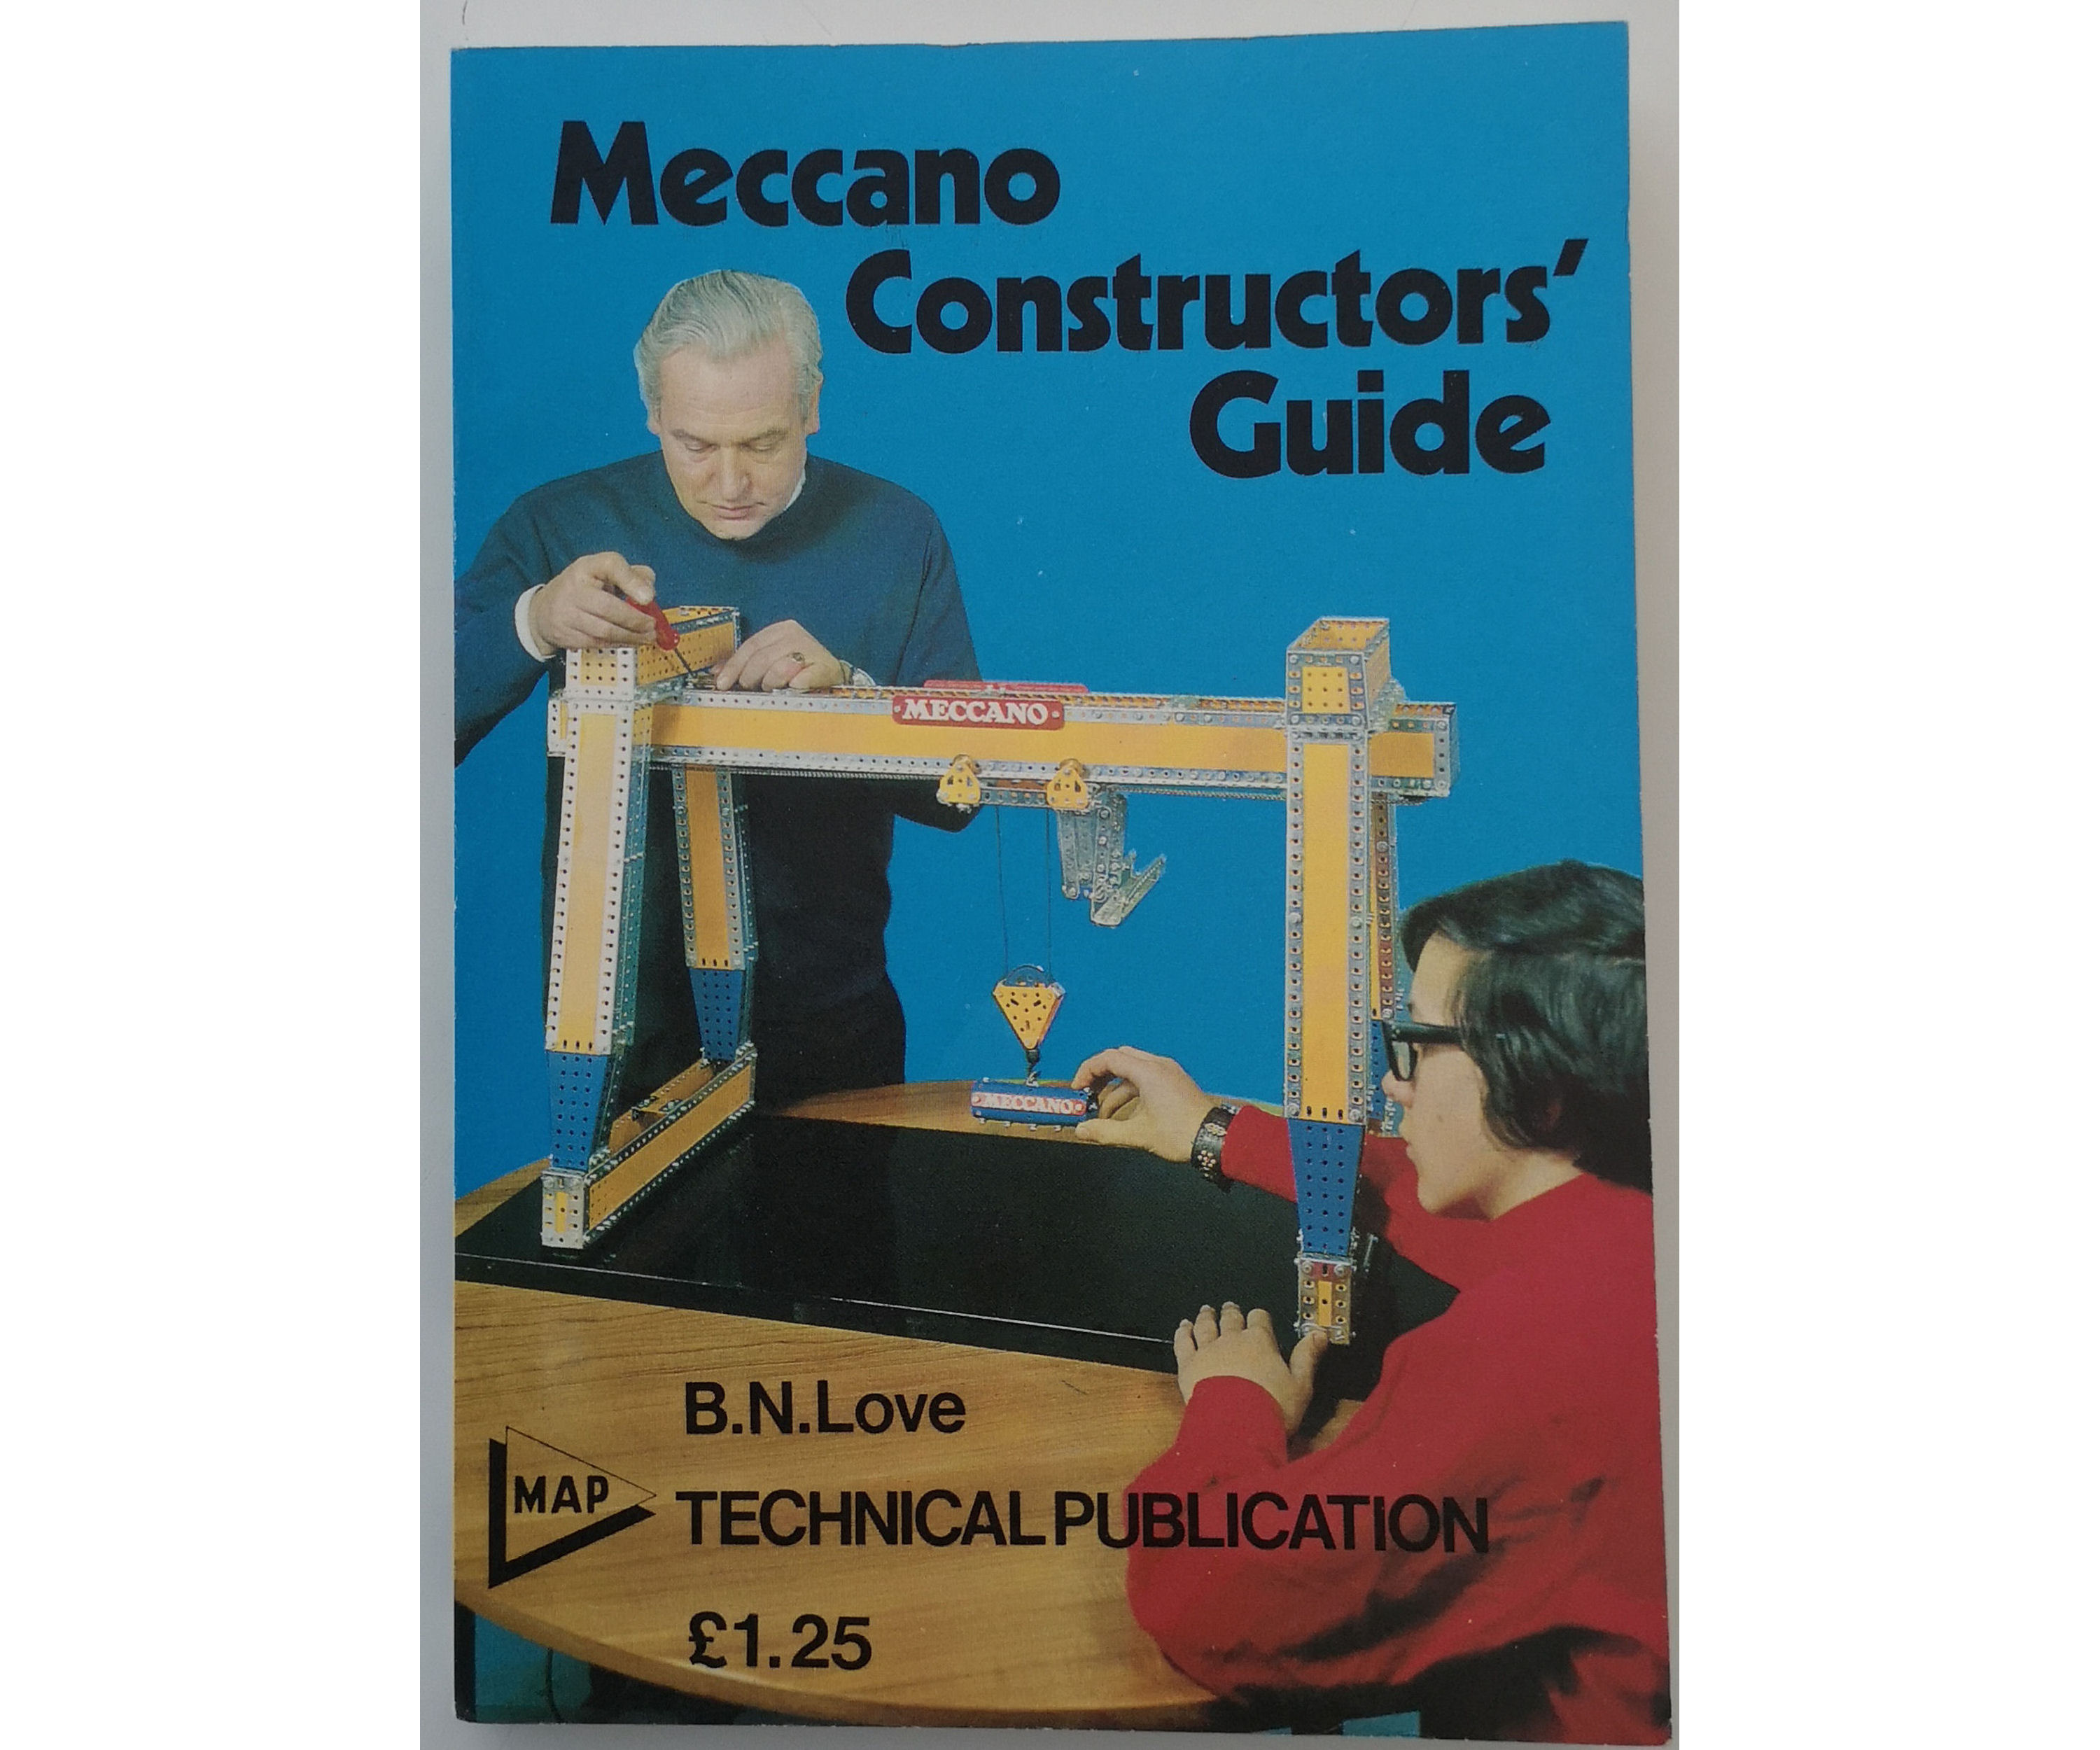 LOT 0196 - MECCANO CONSTRUCTORS GUIDE